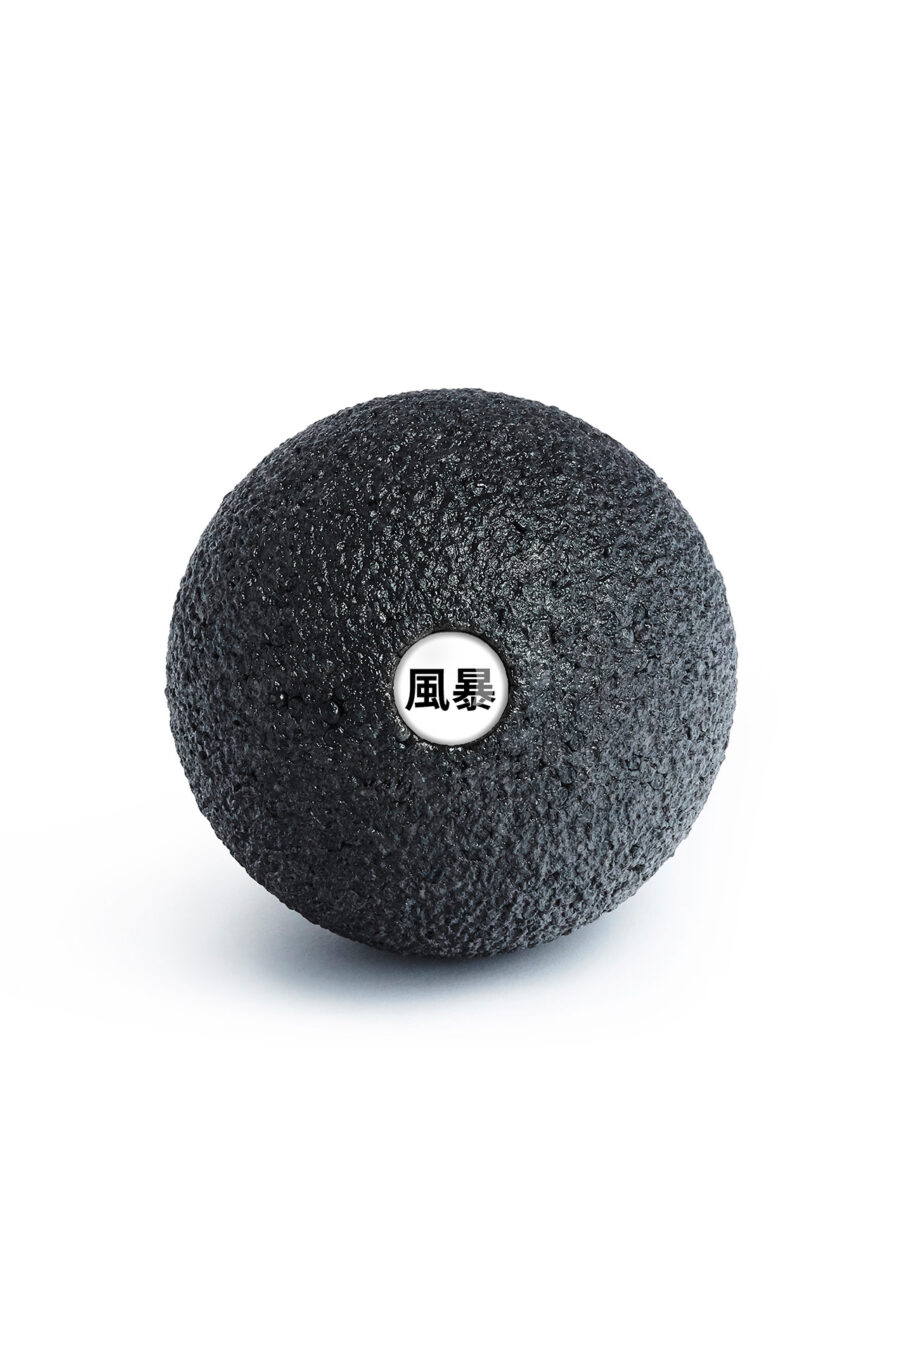 blackroll ball 8cm fengbao kung fu shop wien 1080